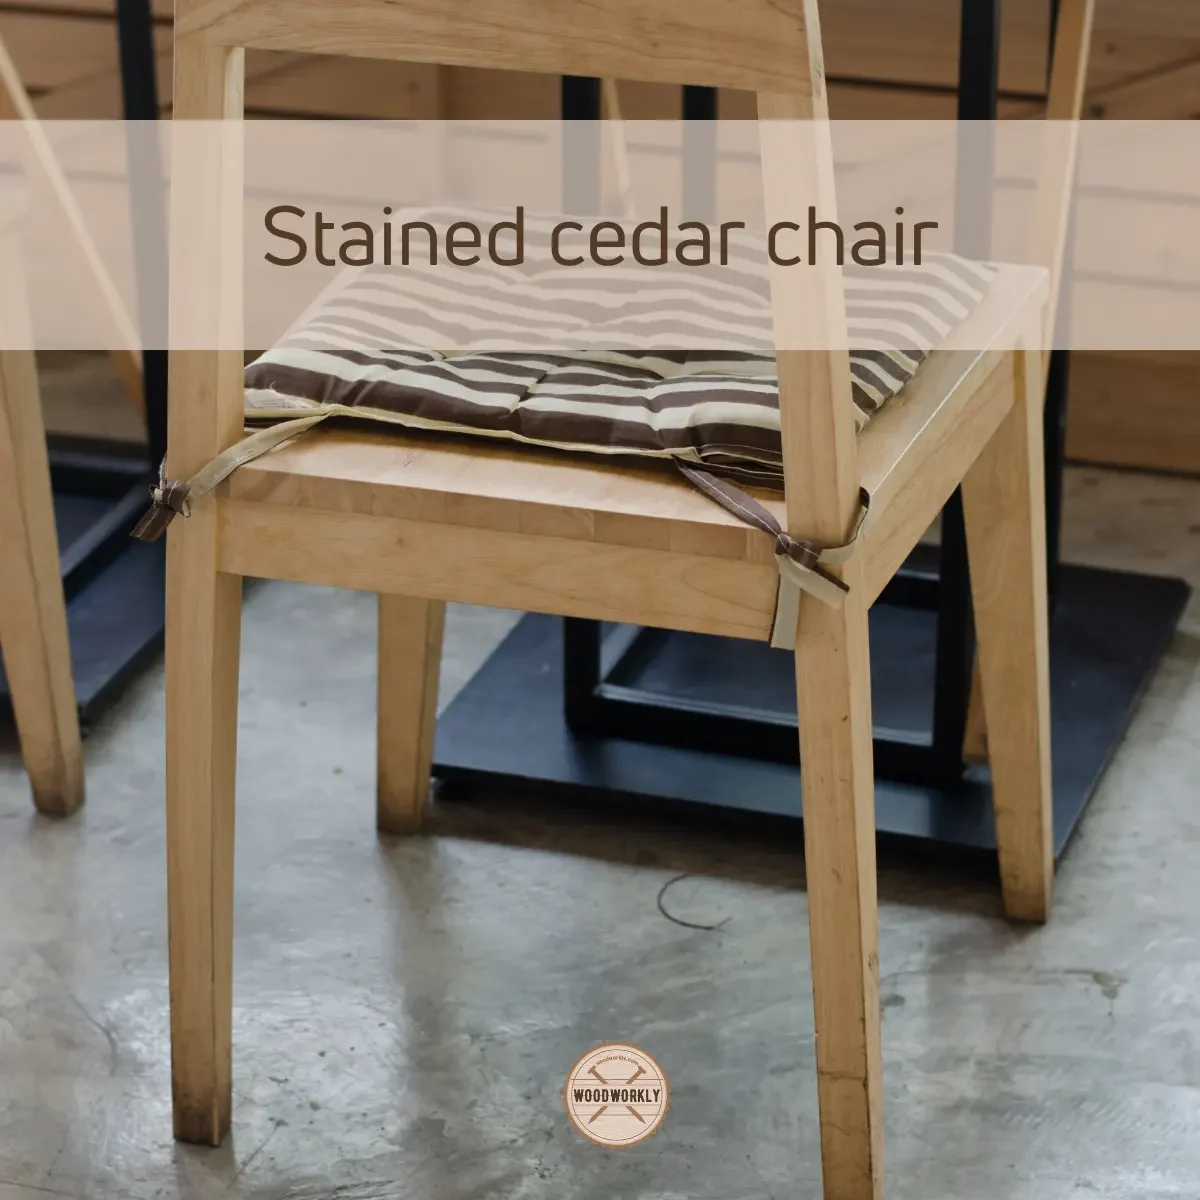 Stained cedar chair